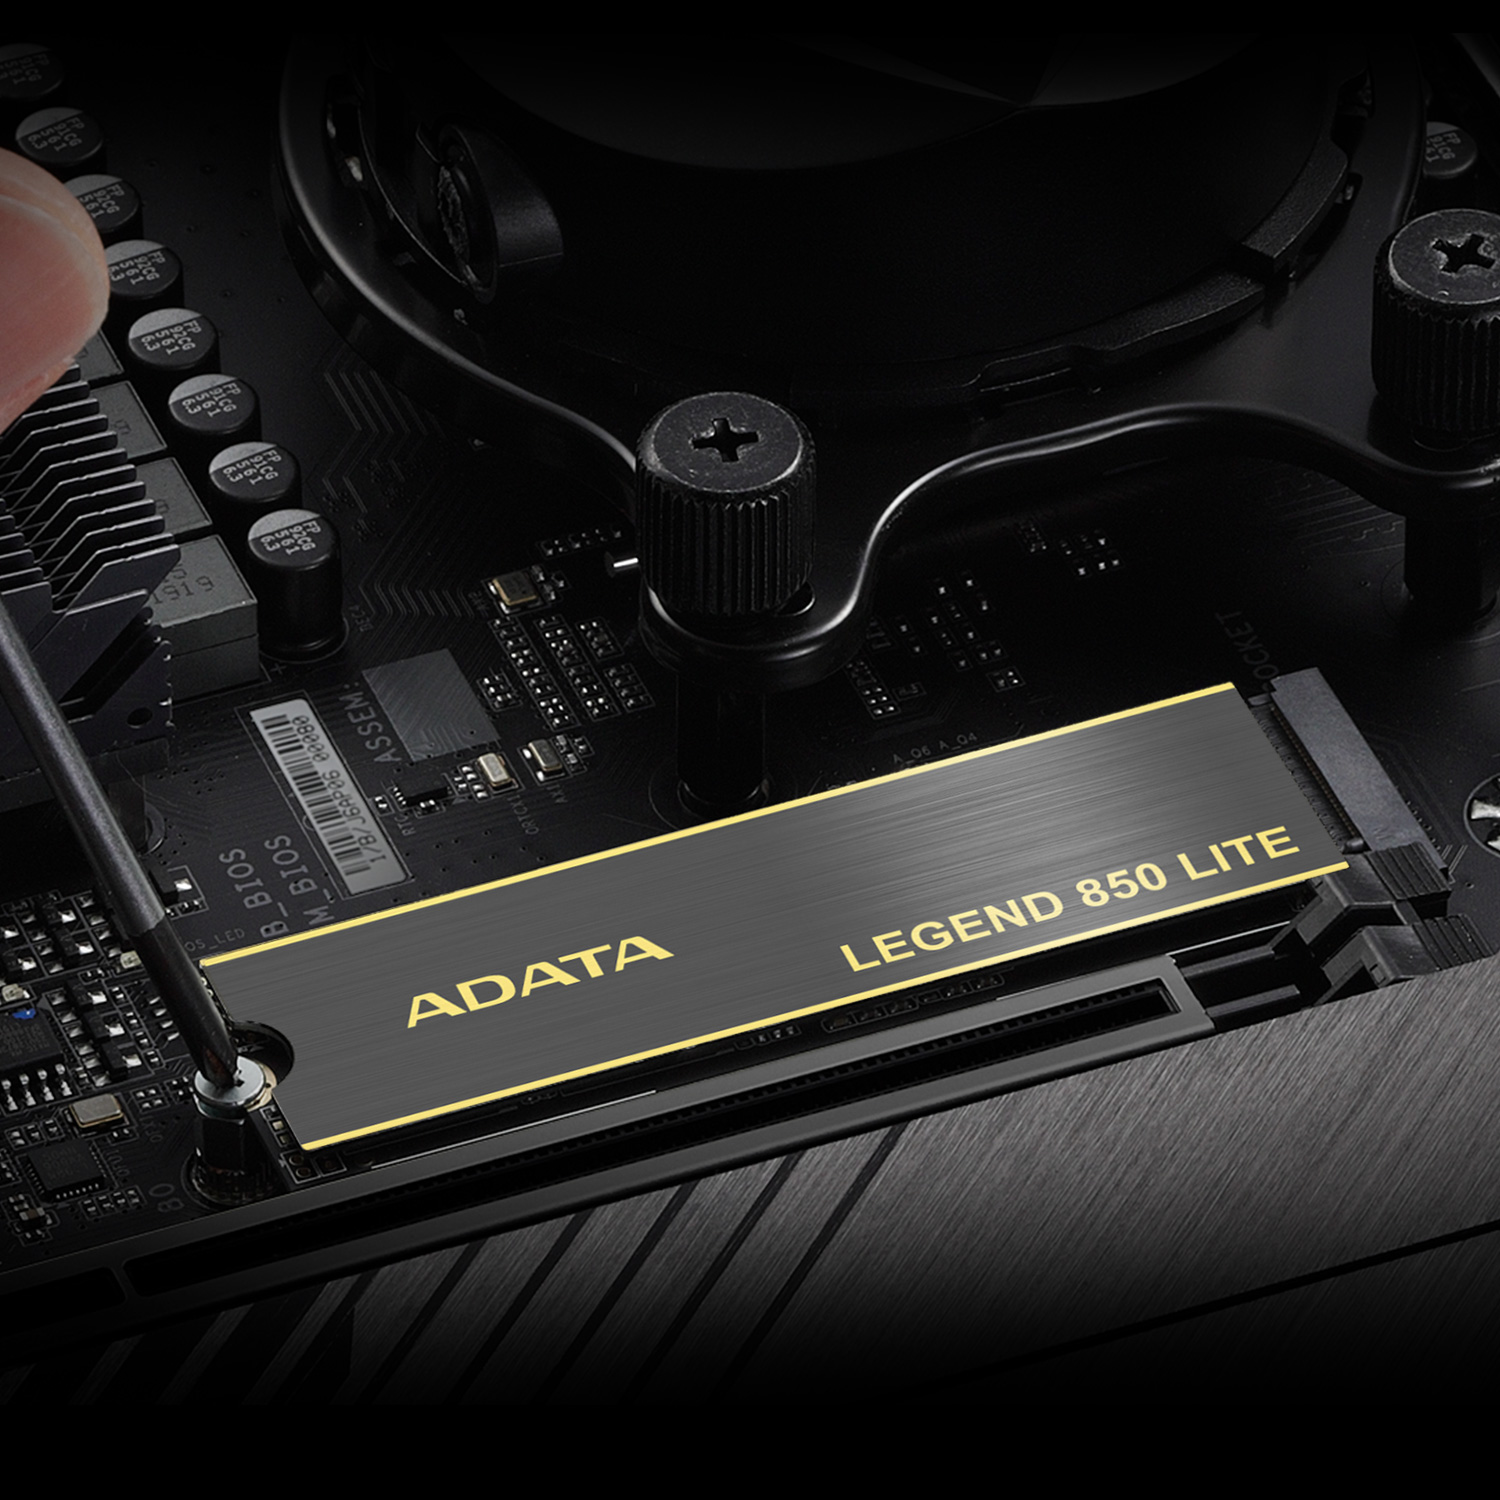 ADATA LEGEND 850 LITE PCIe Gen4 x4 M.2 2280 Solid State Drive 